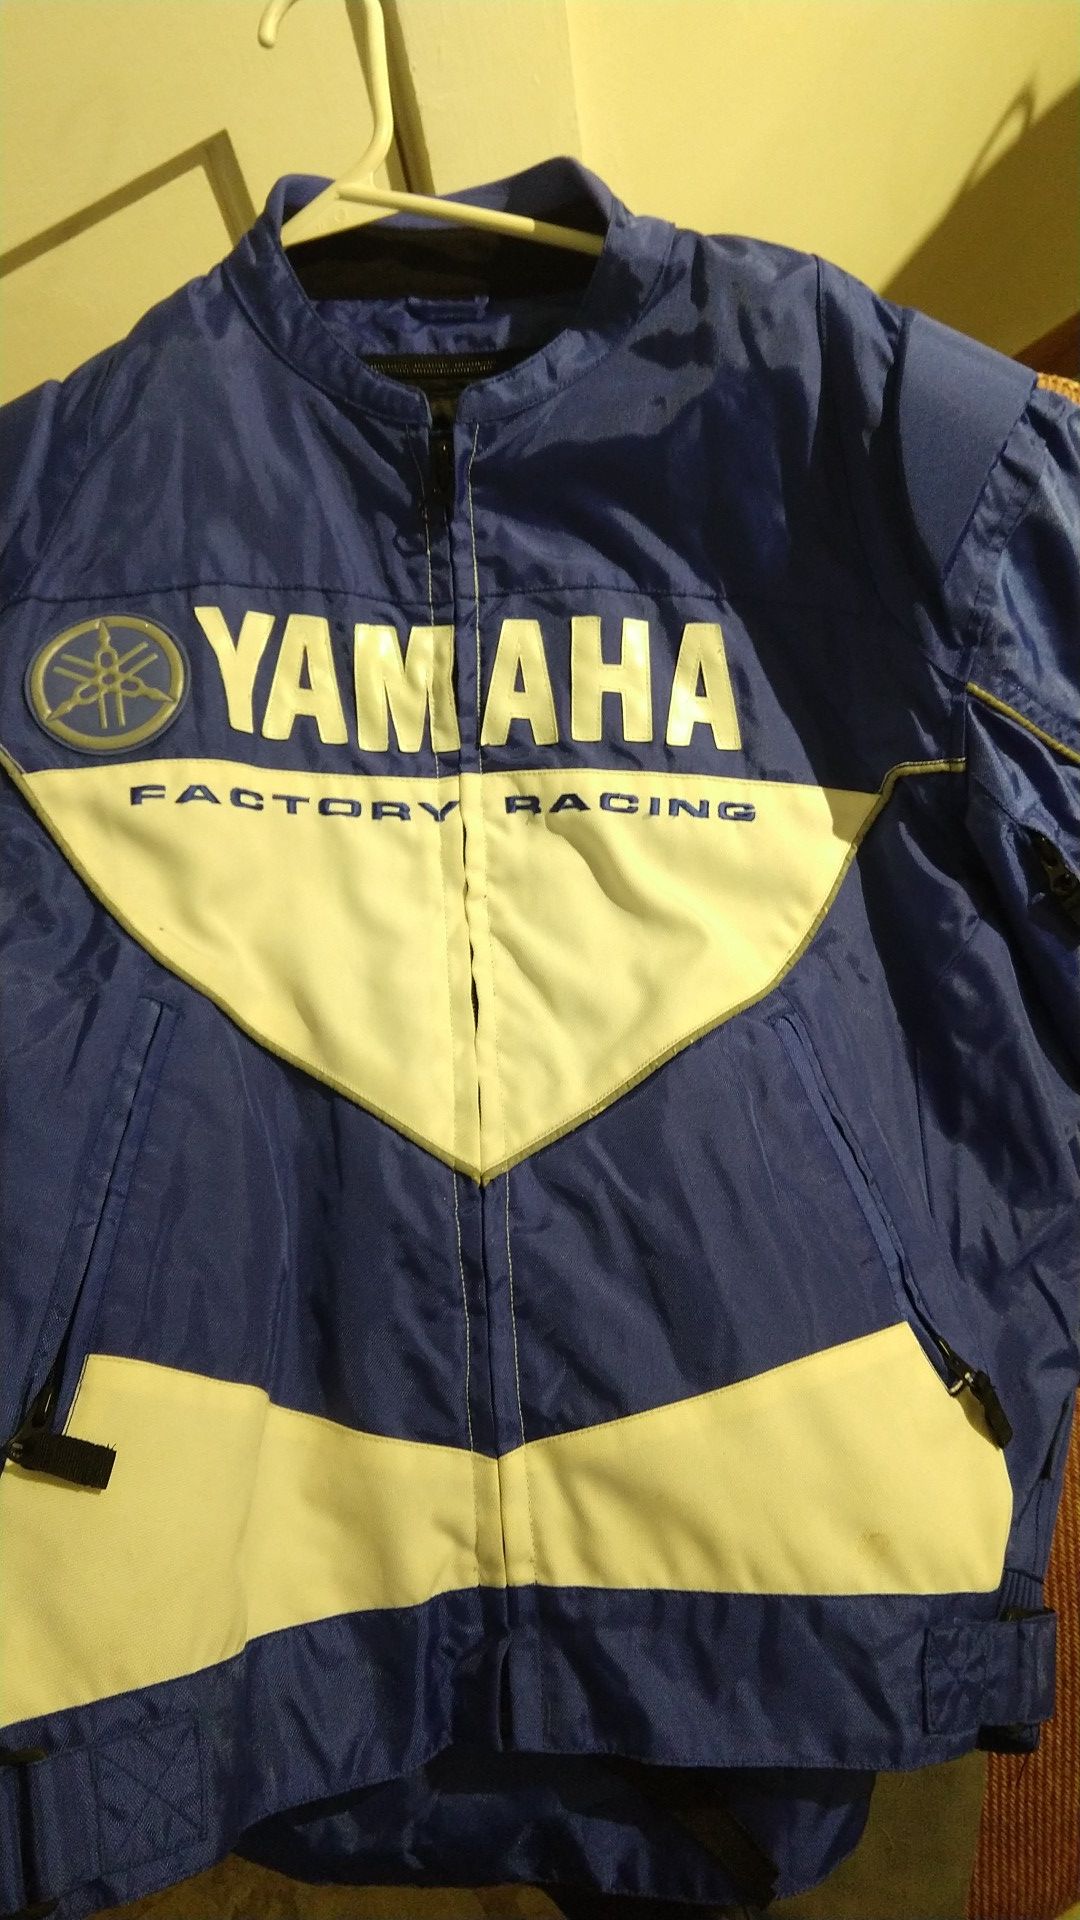 Yamaha snowmobile jacket very nice